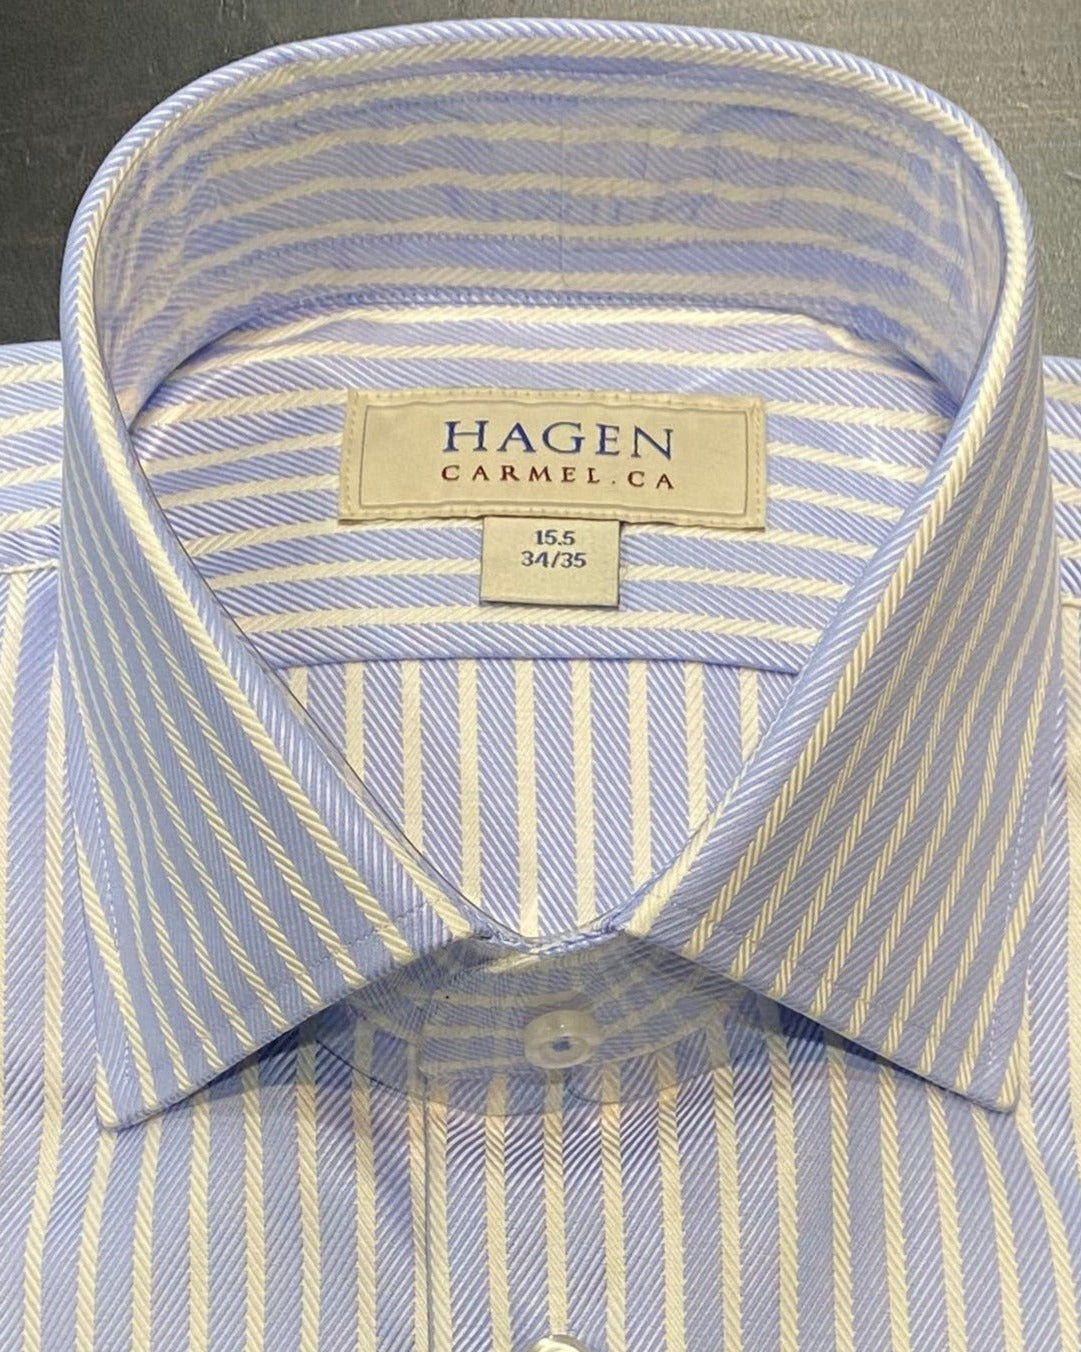 Hagen Carmel Men's Dress Shirts Hagen of Carmel Striped Shirt